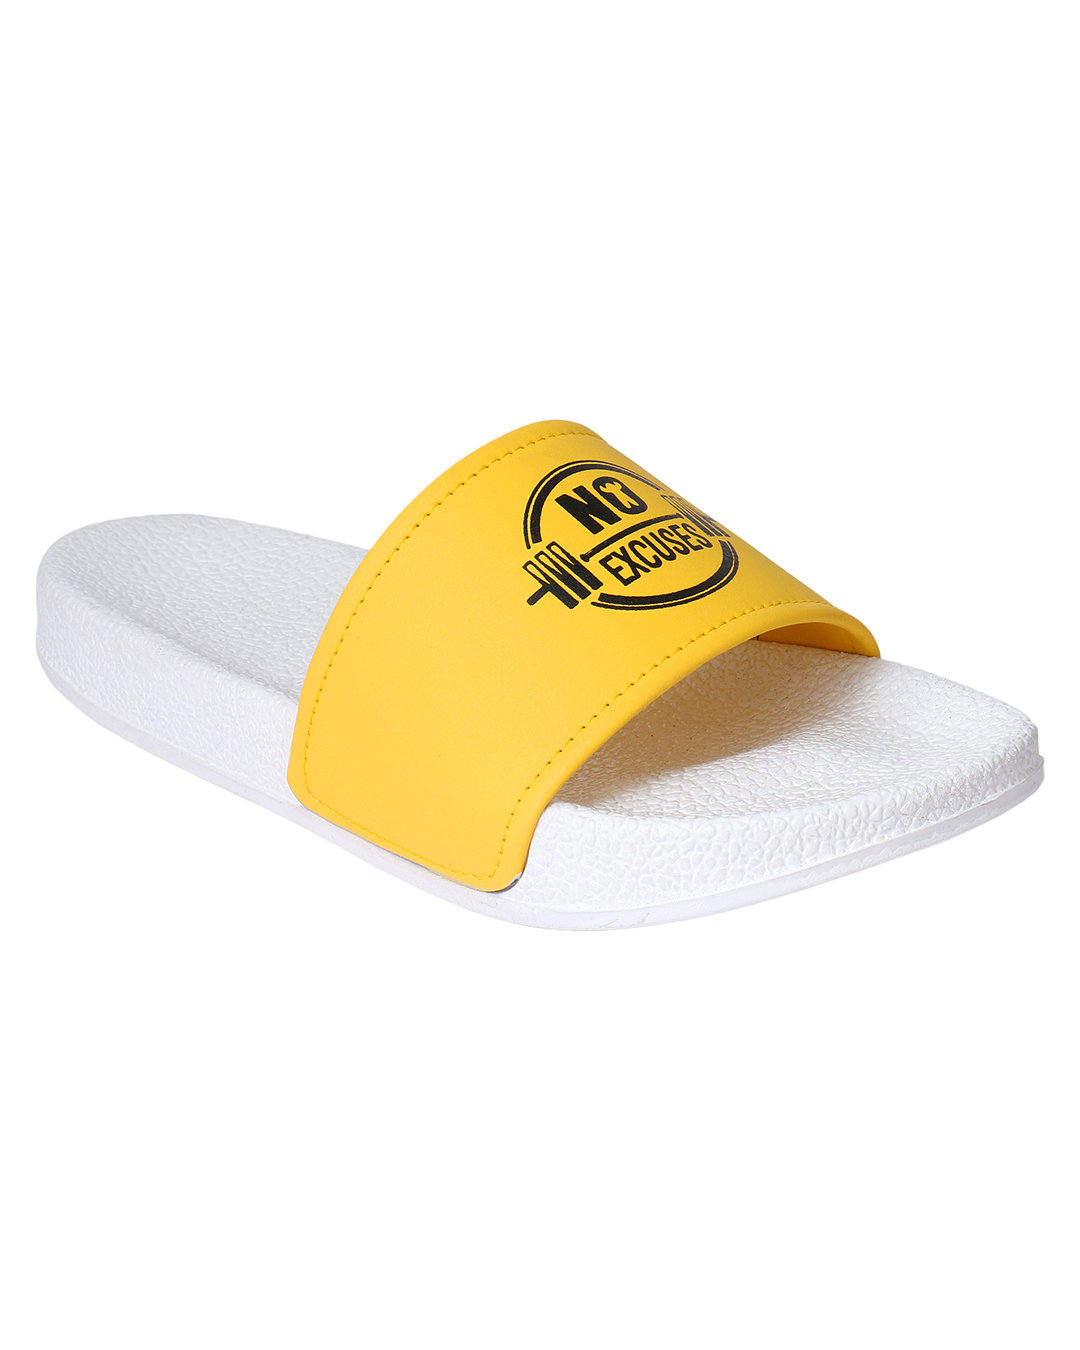 Shop Men's Yellow Latest Flip Flops & Sliders-Back